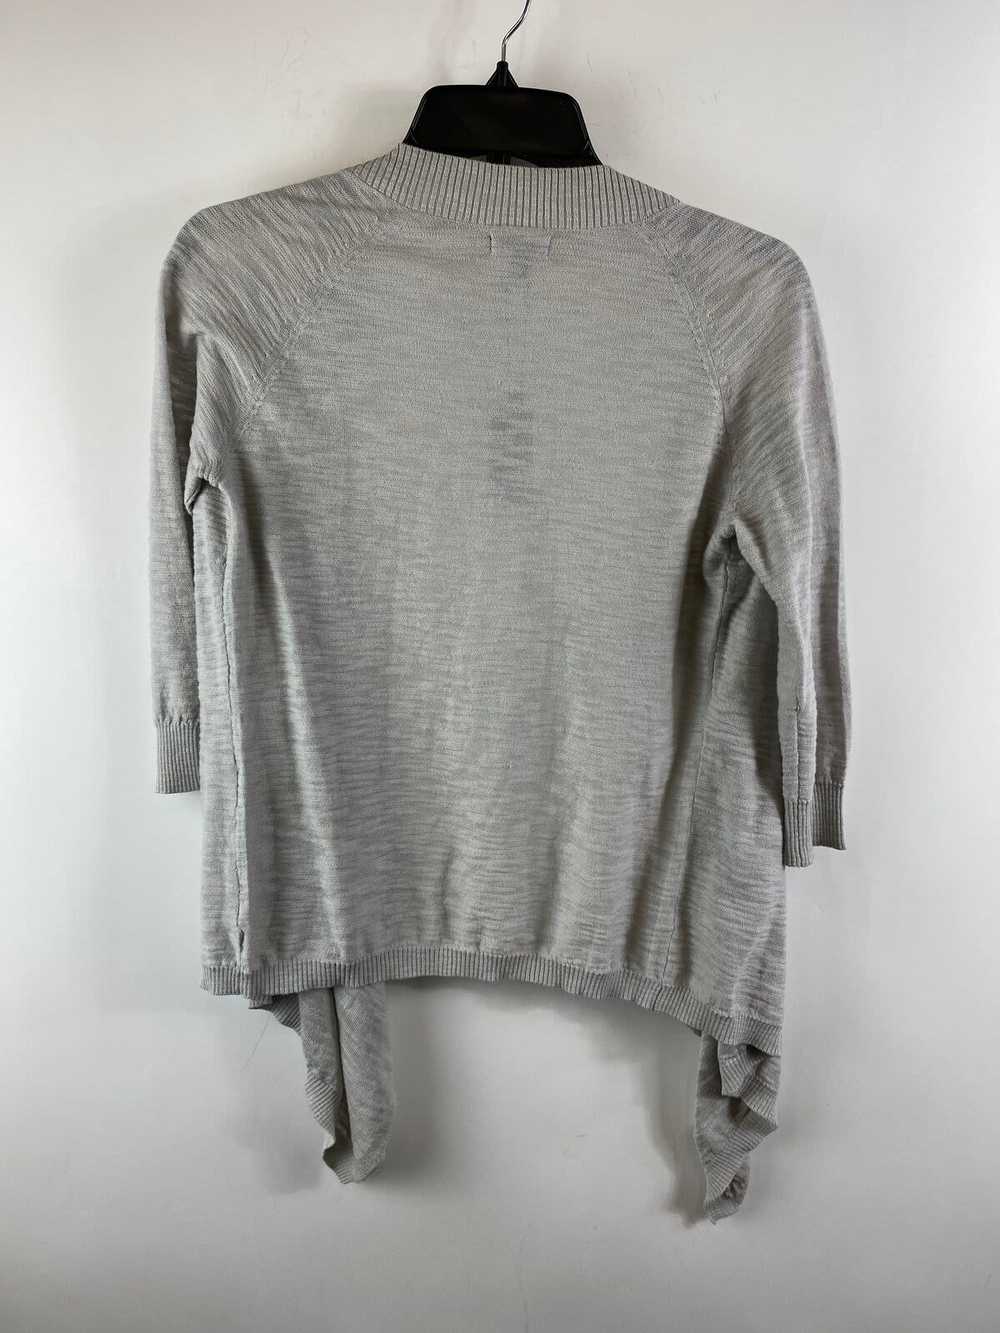 Express Women Gray Cardigan Sweater S/P NWT - image 2